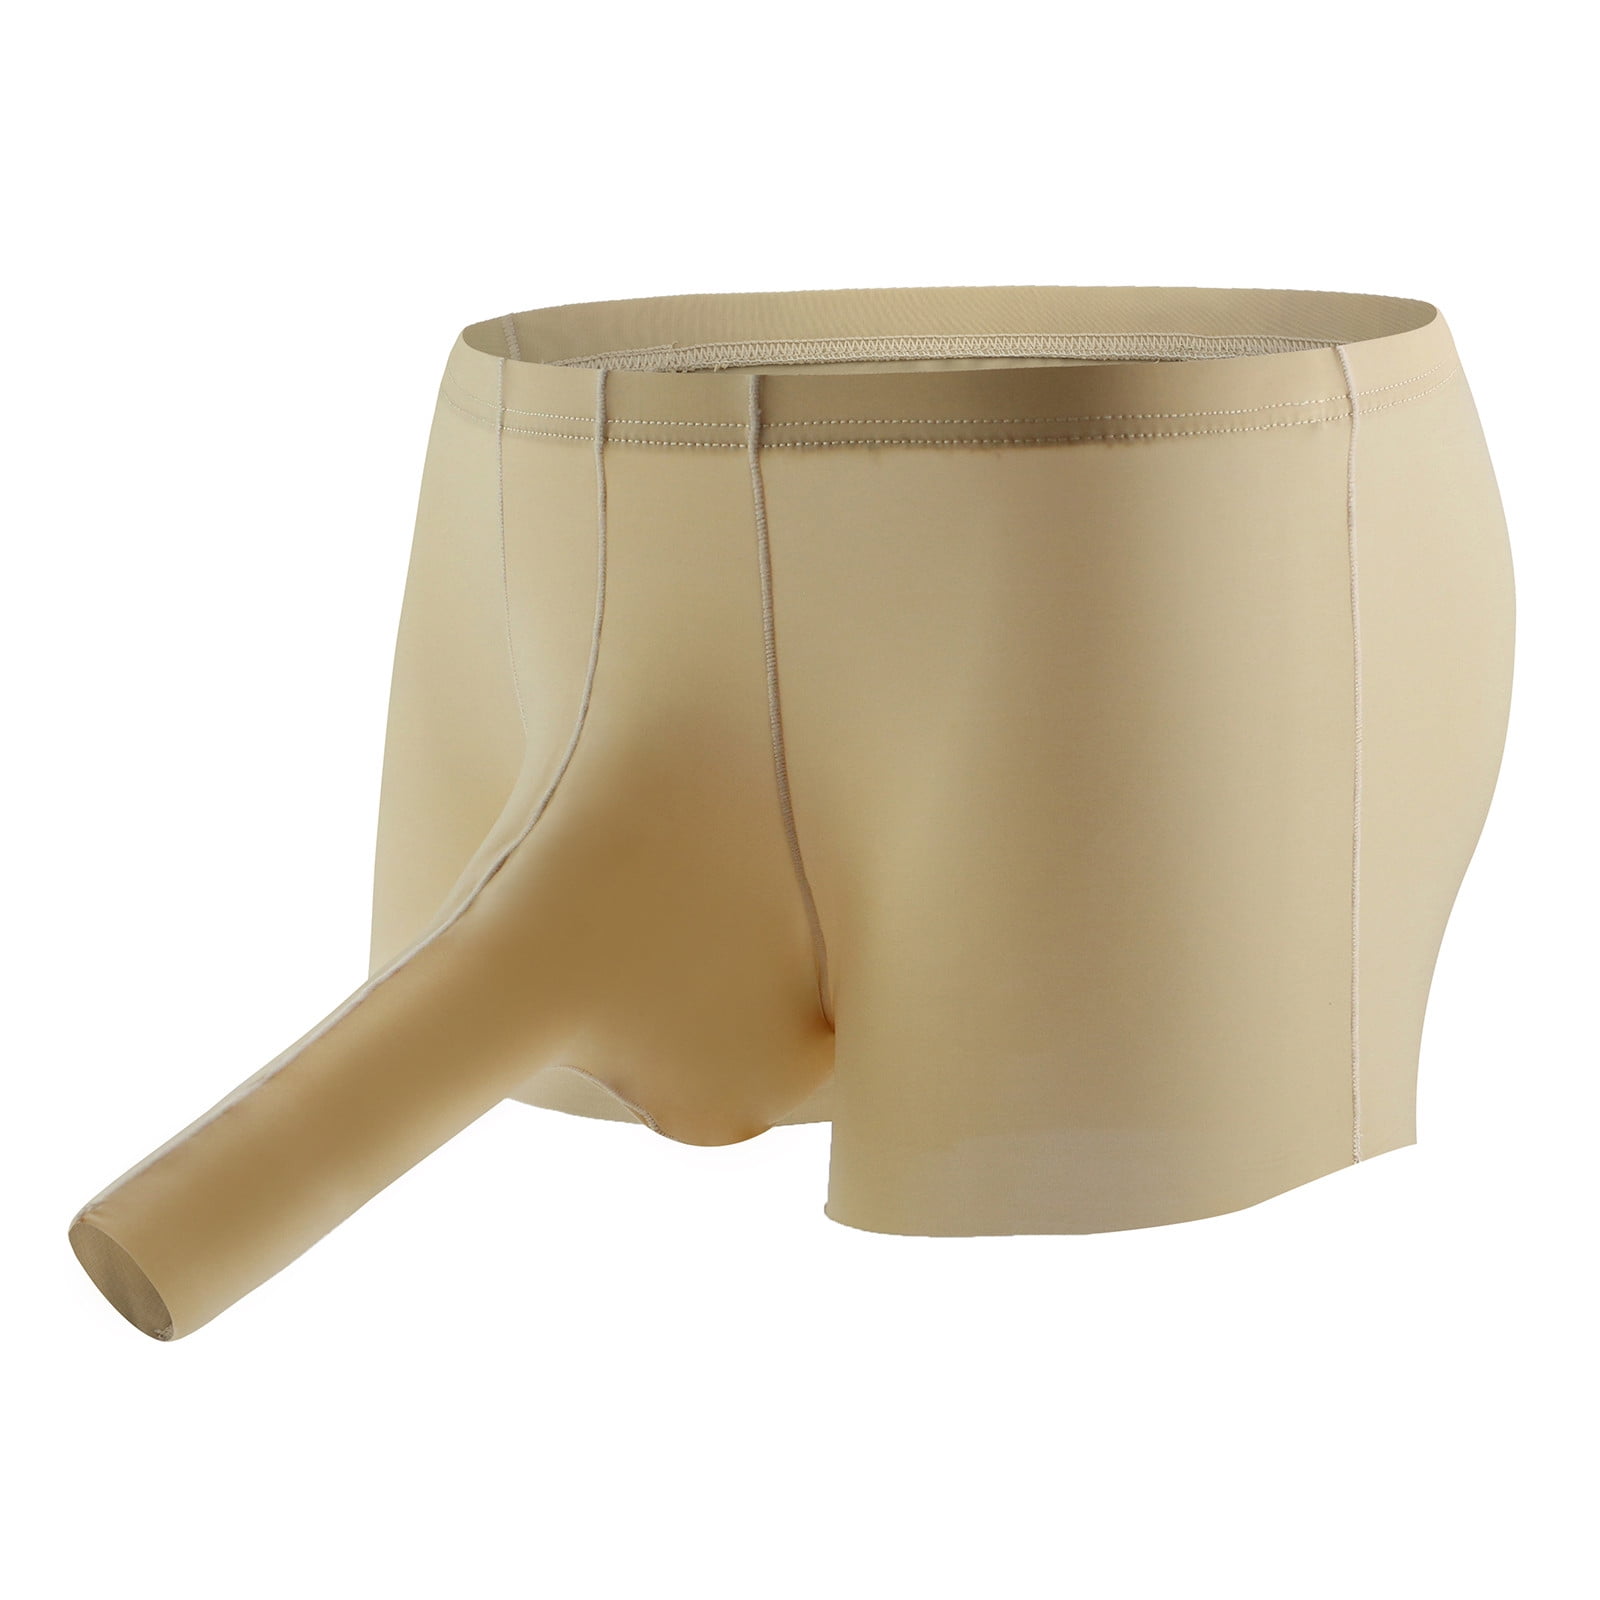 TAIAOJING Fashionable Men's Boxer Pants U-shaped Ice Silk Traceless Trunk  Underpa 